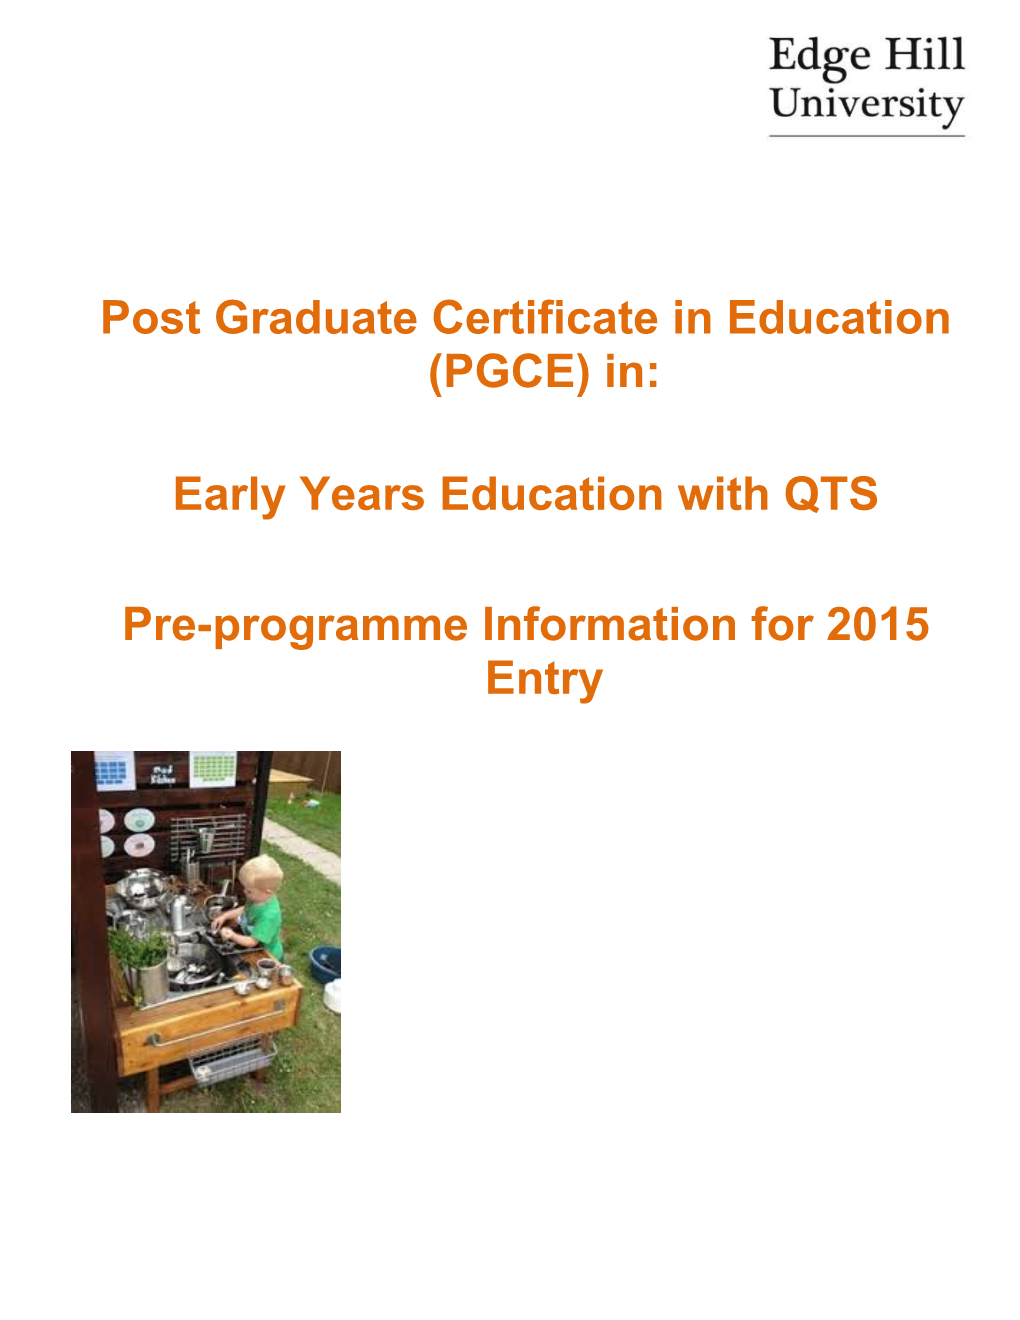 Post Graduate Certificatein Education (PGCE) In